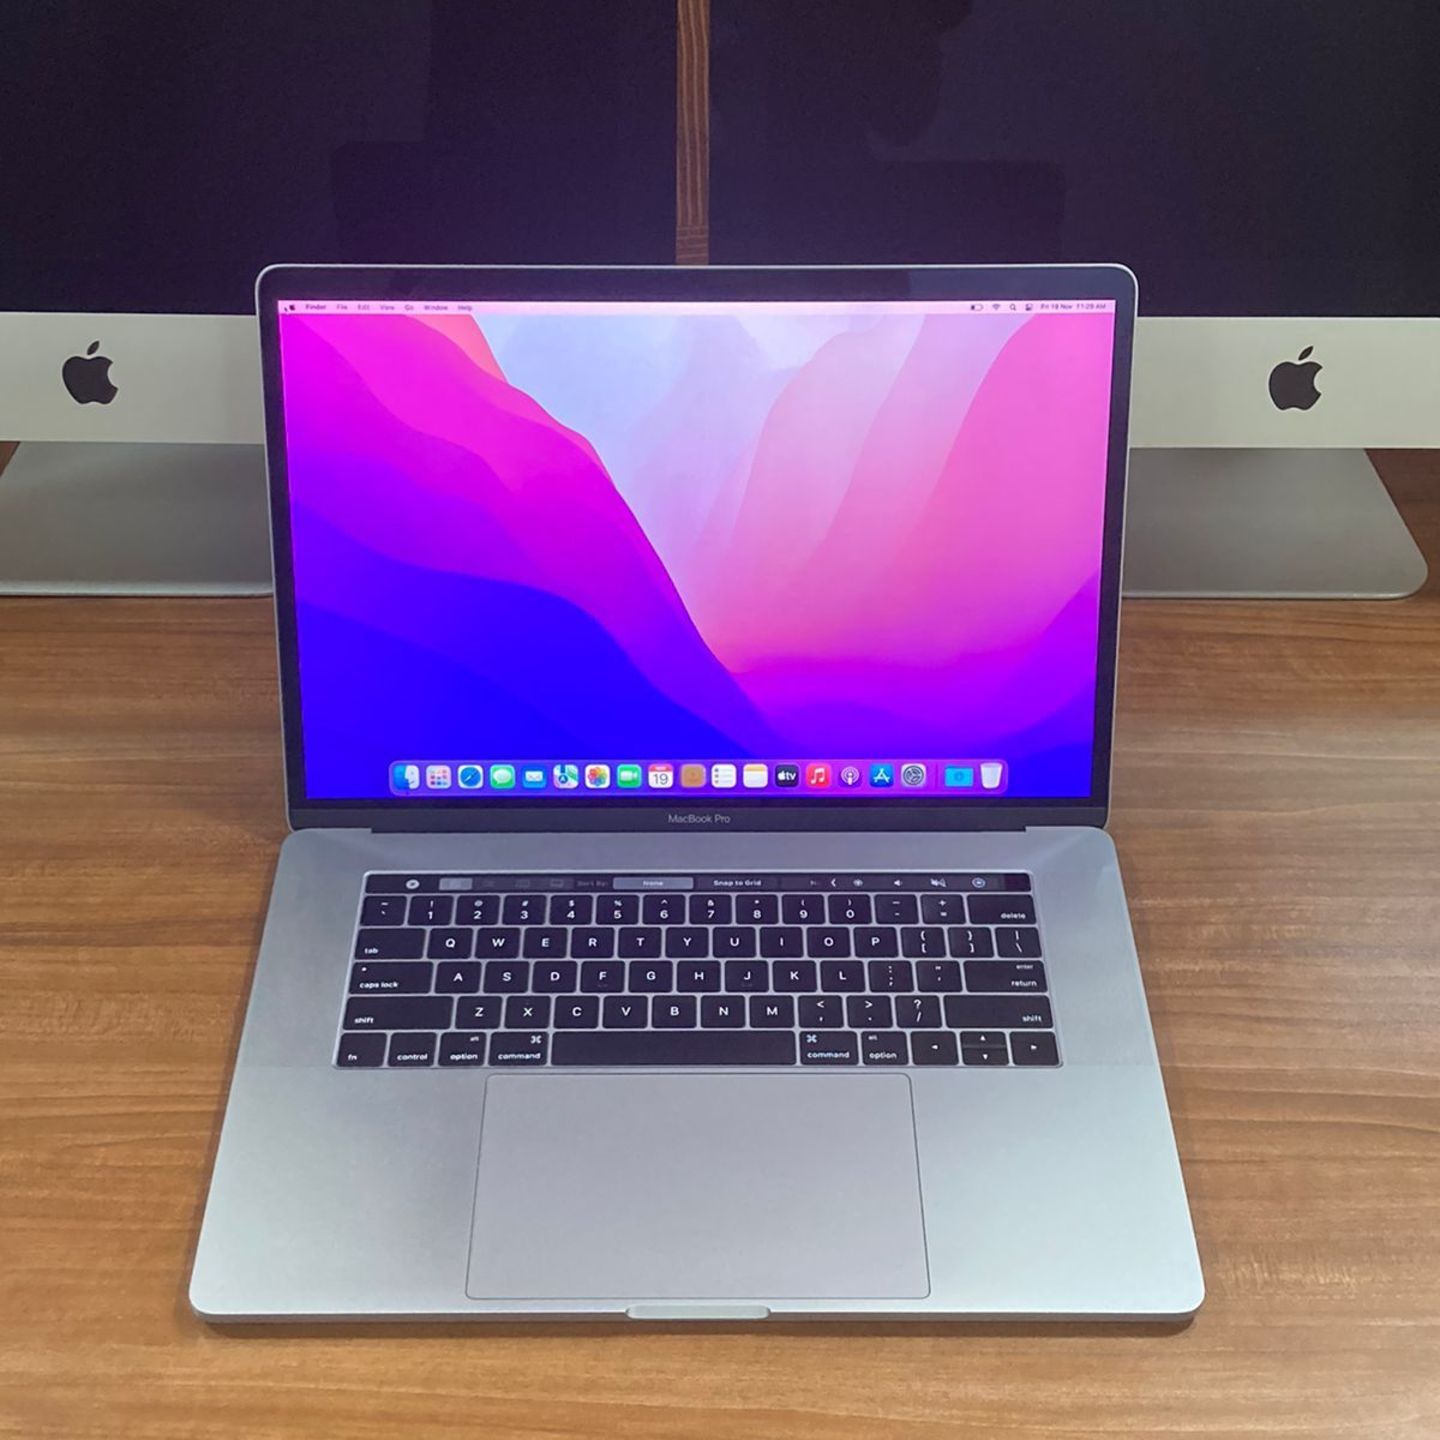  Apple Macbook Pro 15 (A1707) - 2016 💻  💥 Macbook Pro with A+++ Condition 💥  👉🏻 Core i7 Processor 2.6GHz 👉🏻 16 GB RAM 👉🏻 256 GB SSD Flash  👉🏻 Graphics Radeon Pro 450 2GB + Intel HD Graphics 530 1.5GB 👉🏻 15.4" Retina Display 👉🏻 MacOS Monterey 👉🏻 Color Space Grey